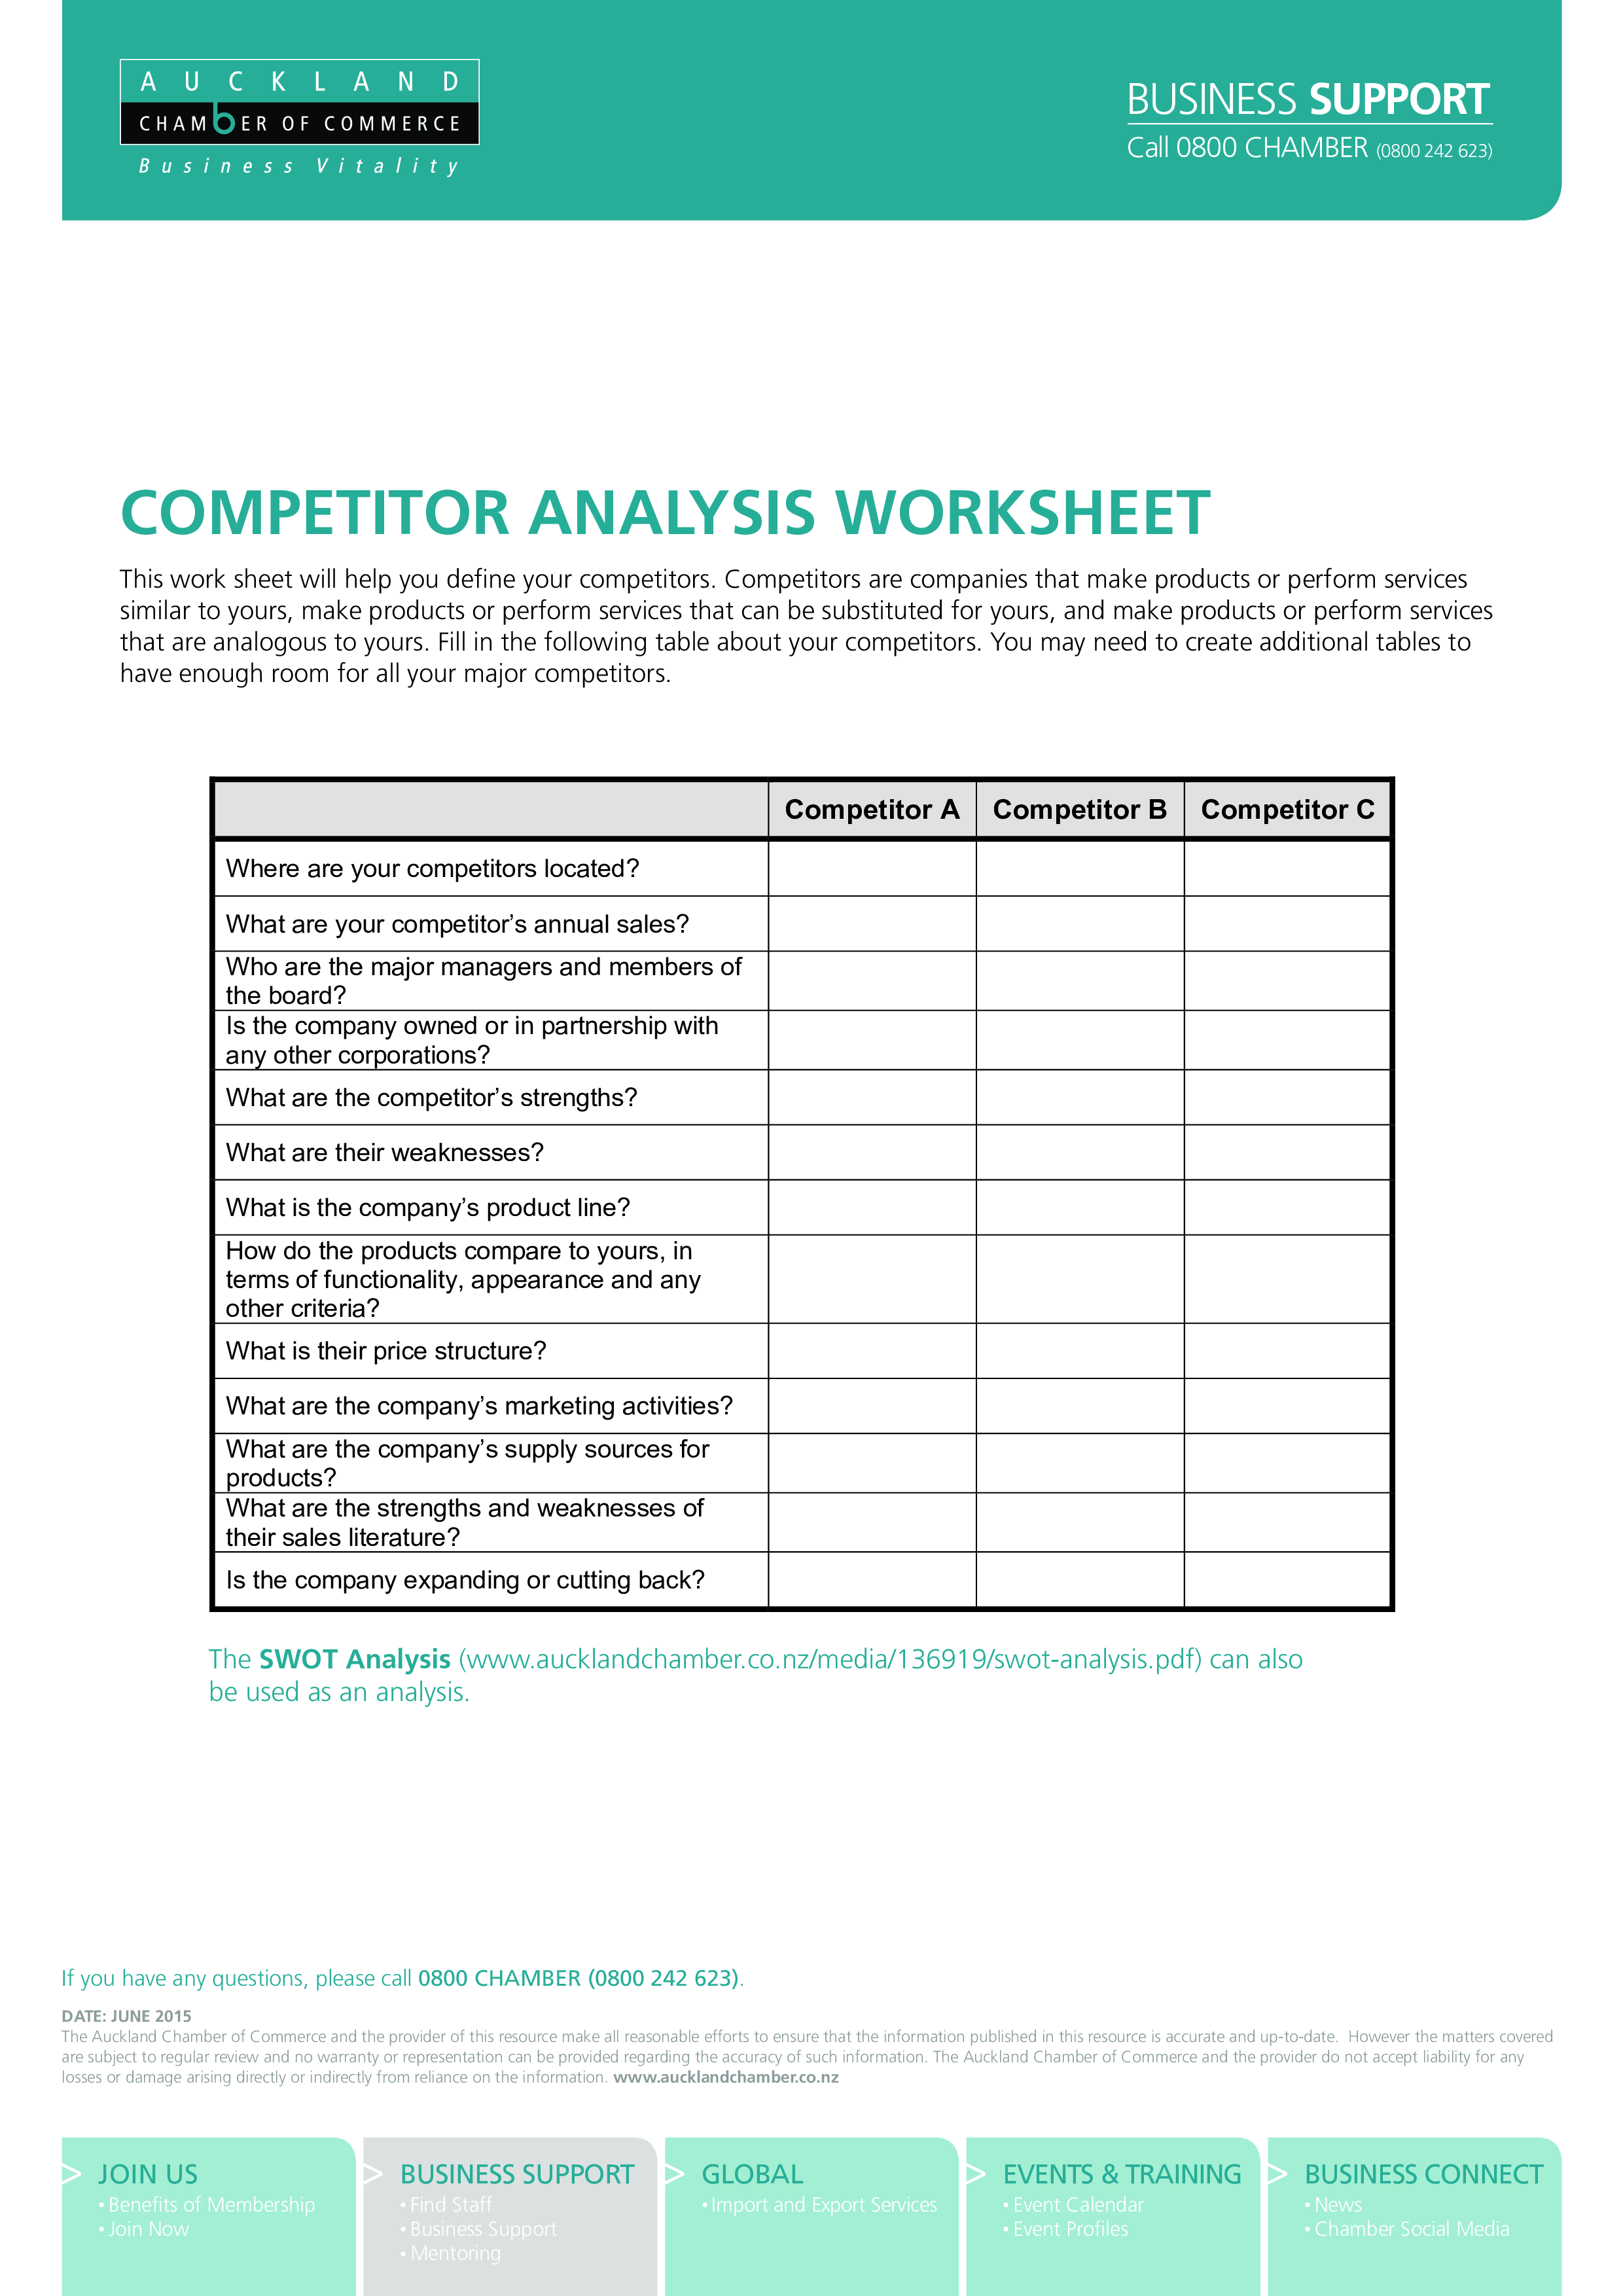 competitor analysis worksheet template